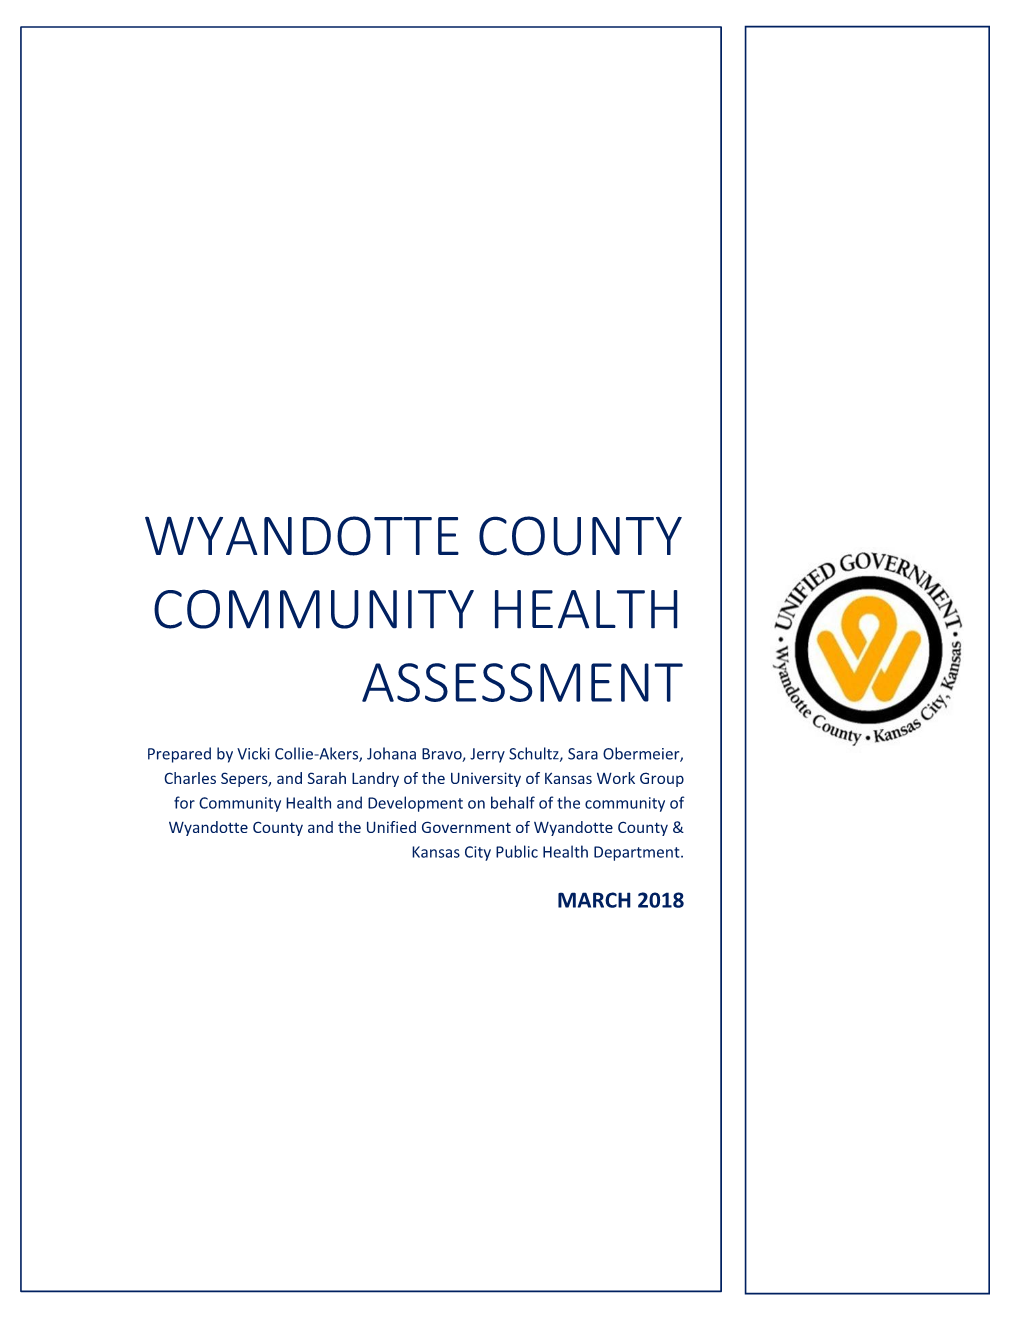 Wyandotte County Community Health Assessment